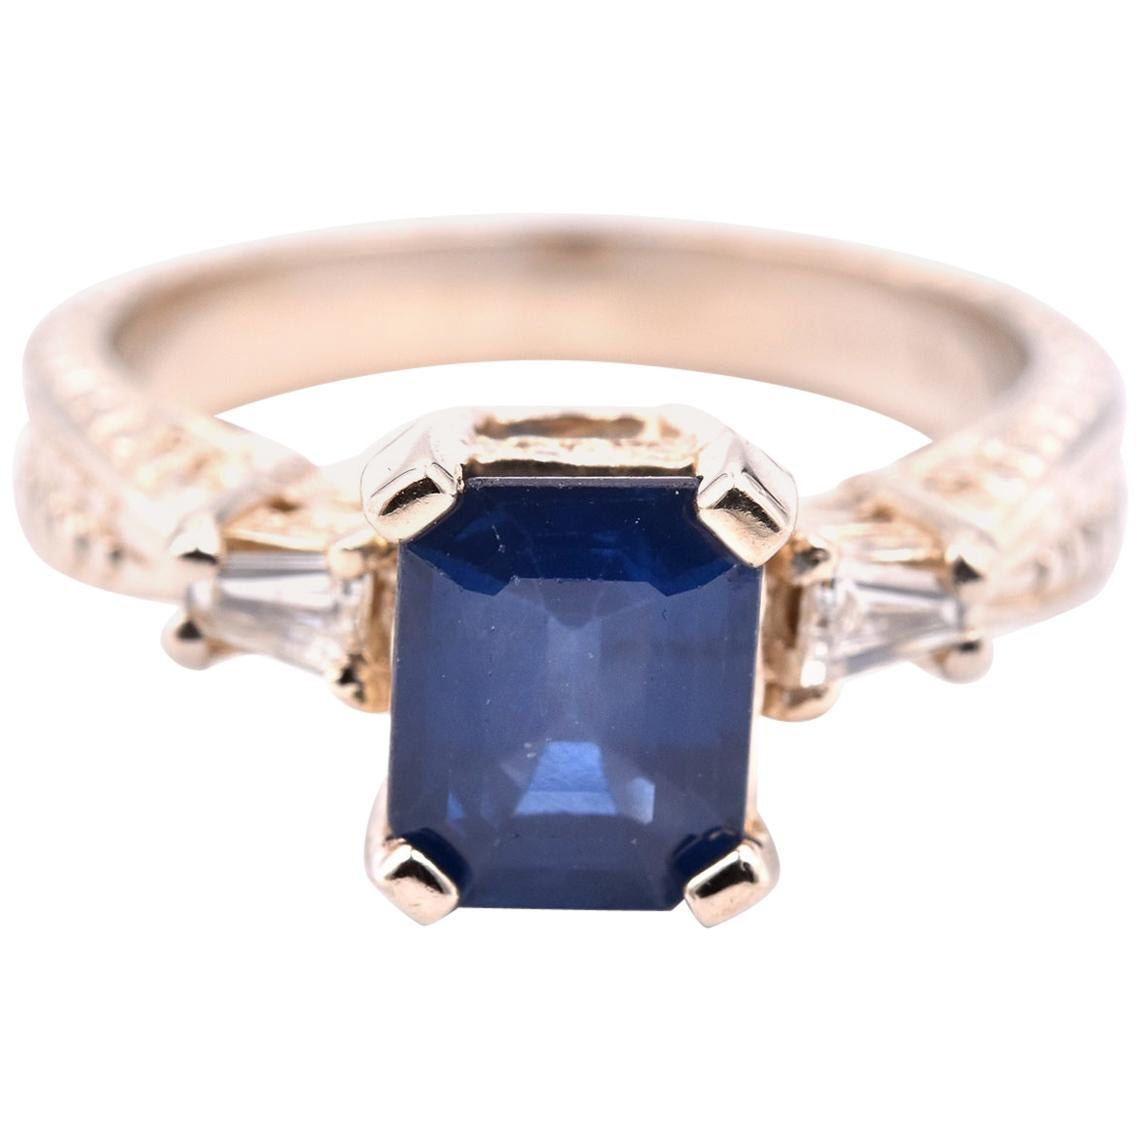 18 Karat Yellow Gold Sapphire and Diamond Ring